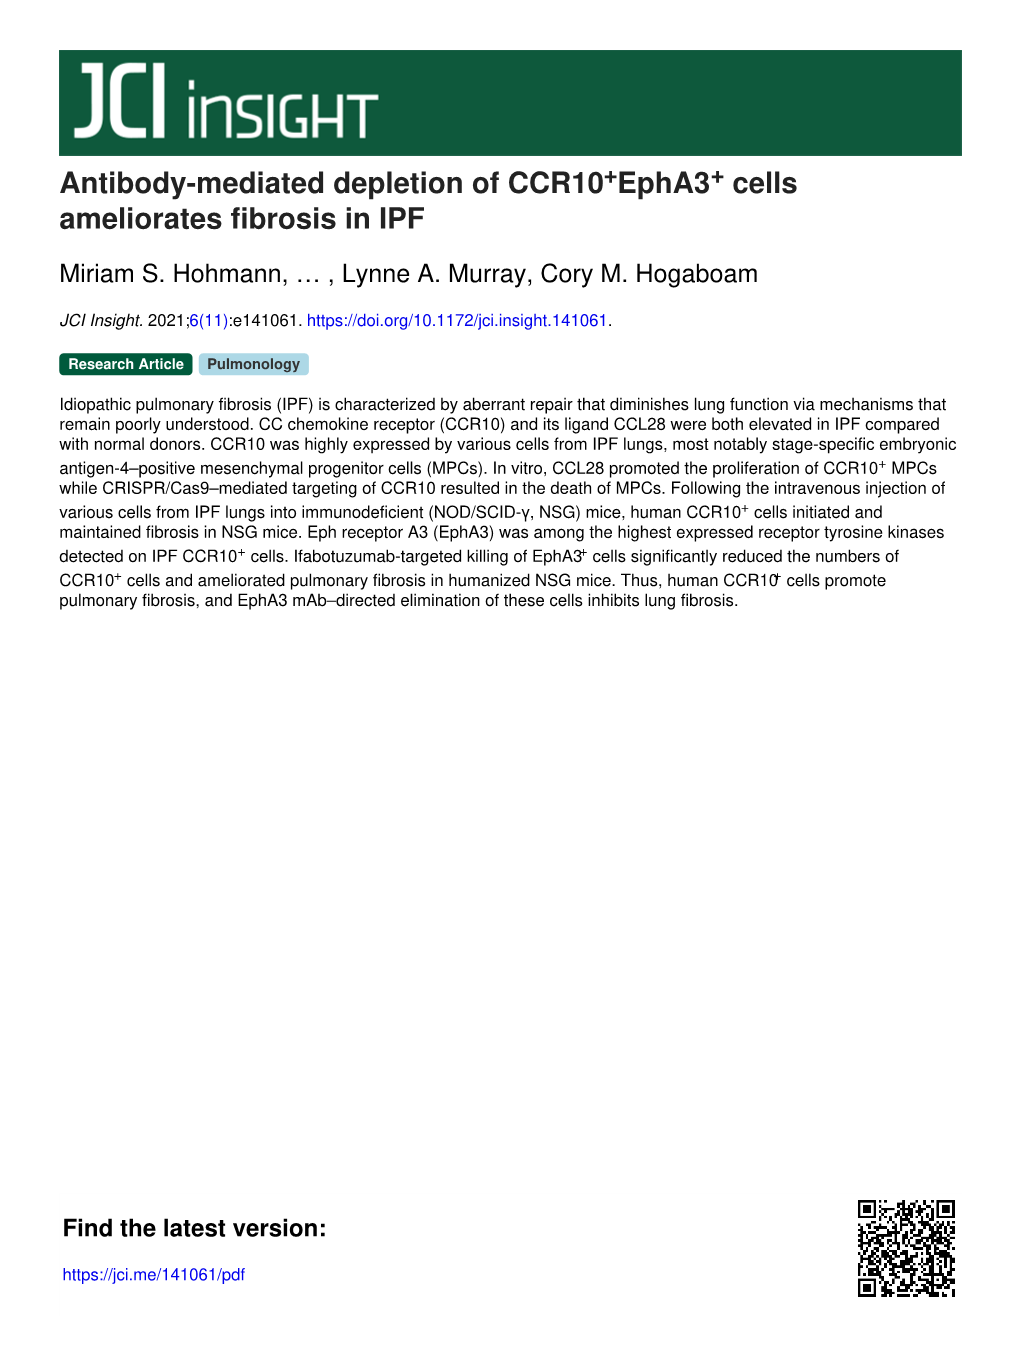 Antibody-Mediated Depletion of CCR10 Epha3 Cells Ameliorates